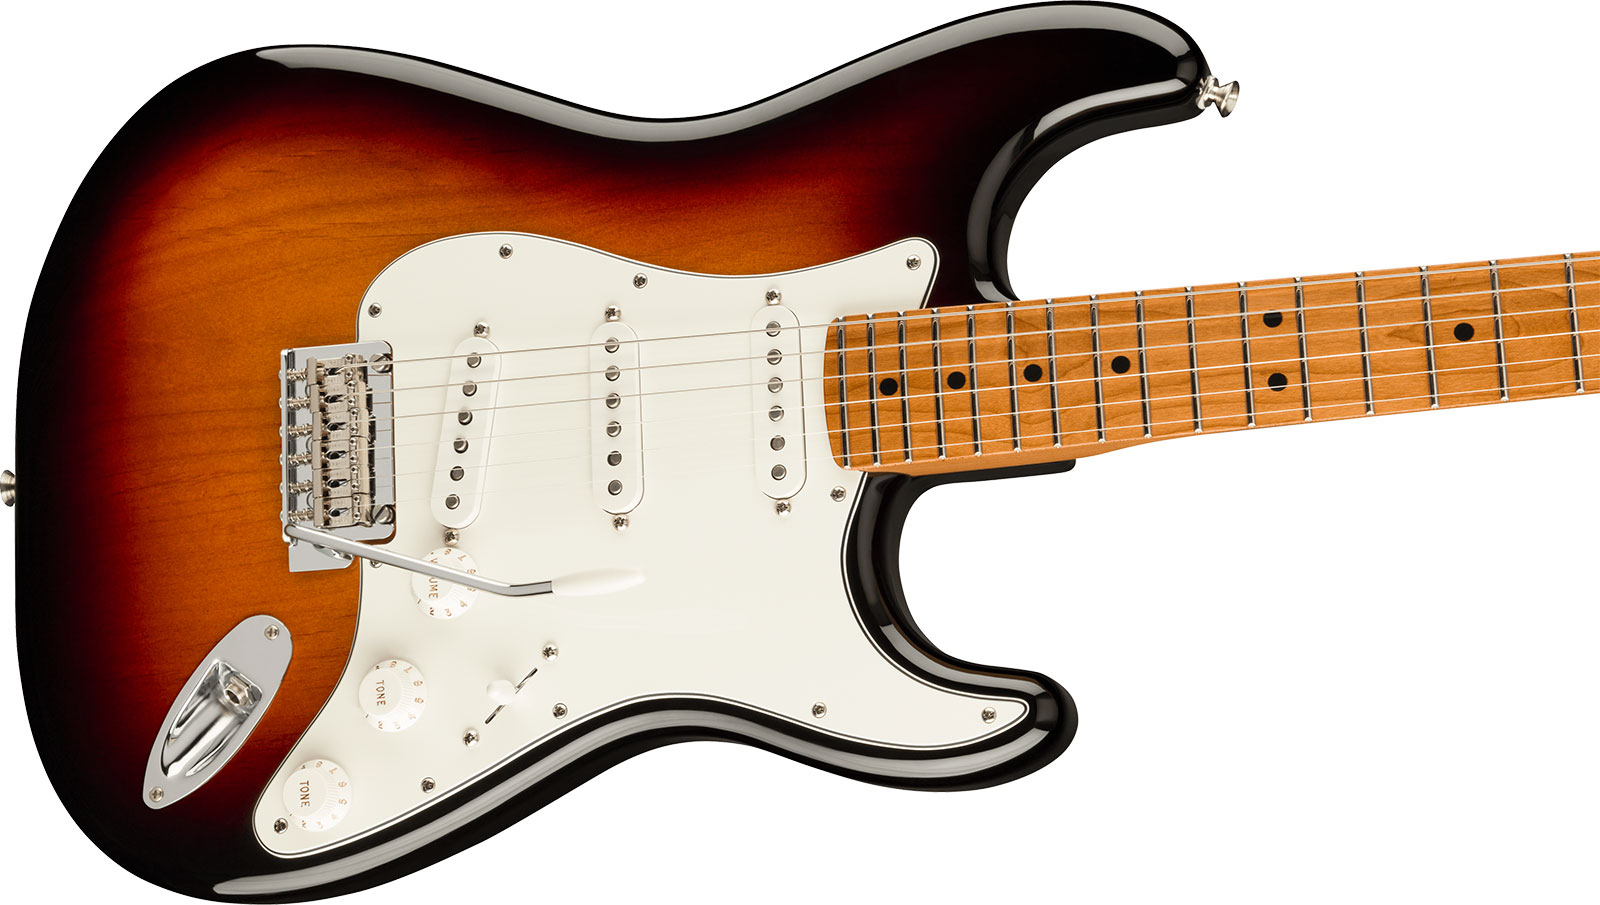 Fender Strat Player Roasted Maple Neck Ltd Mex 3s Trem Mn - 3 Color Sunburst - Guitarra eléctrica con forma de str. - Variation 2